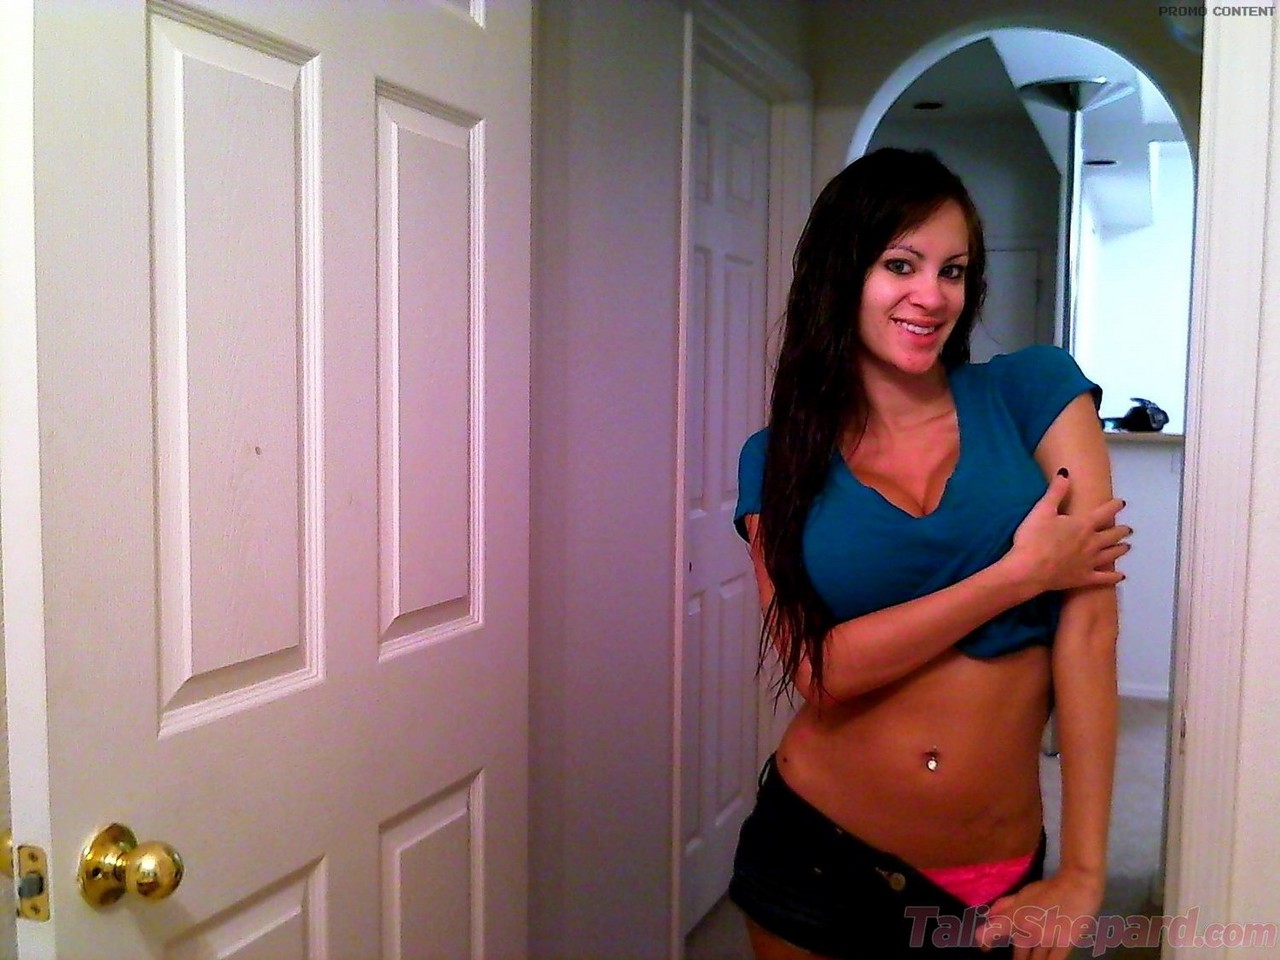 Brunette girl Talia Shepard soaks up her fake tits while taking a shower 色情照片 #427497507 | Talia Shepard Pics, Talia Shepard, Shower, 手机色情